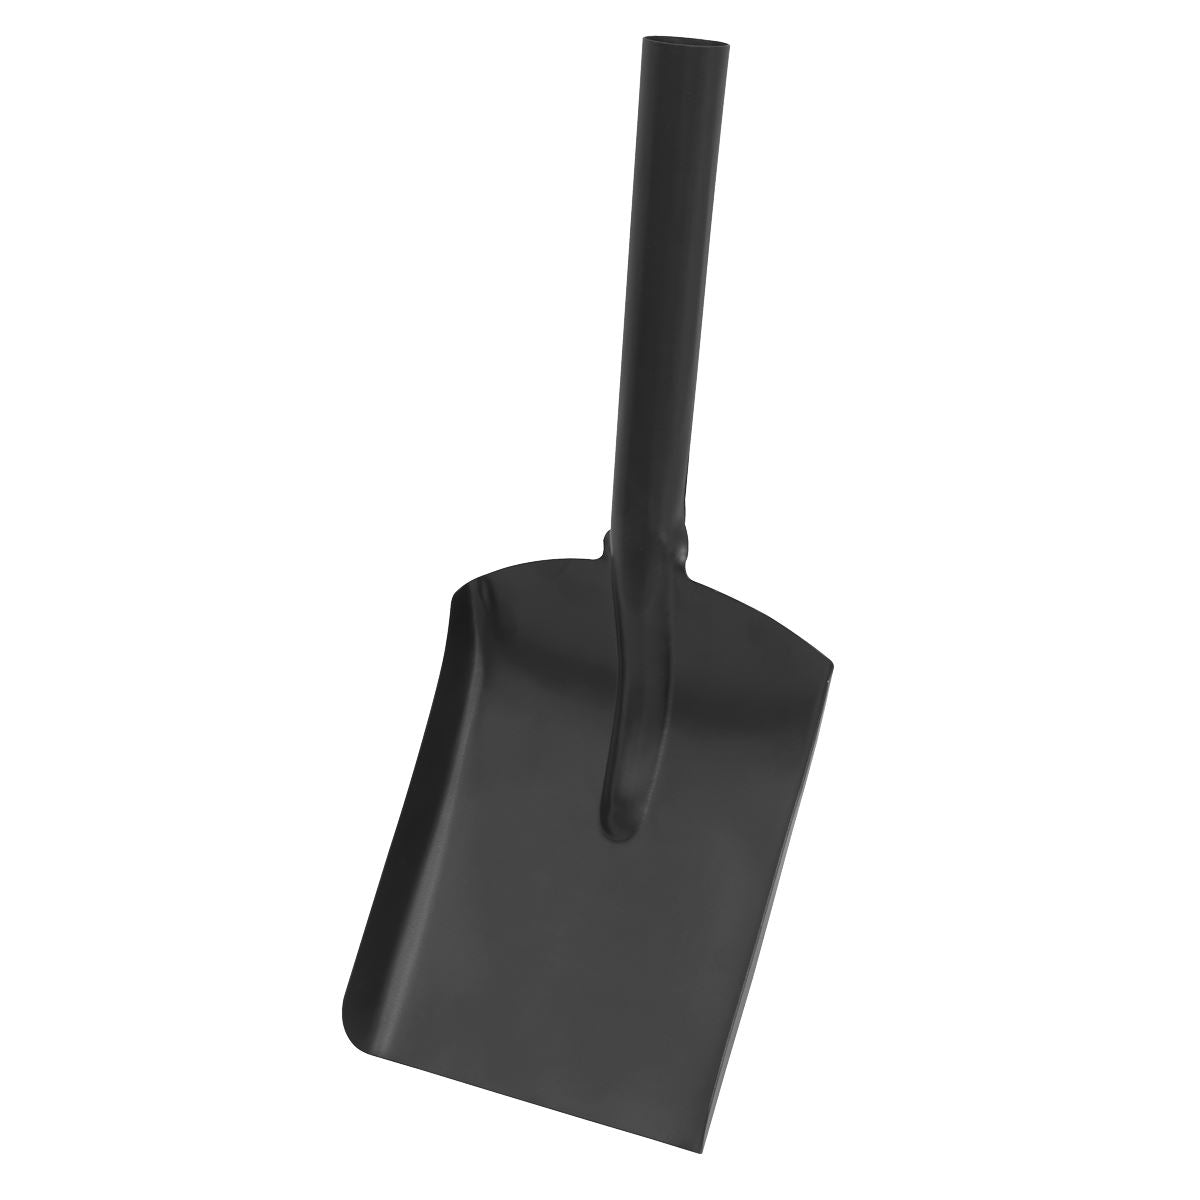 Sealey Coal Shovel 6" with 185mm Handle